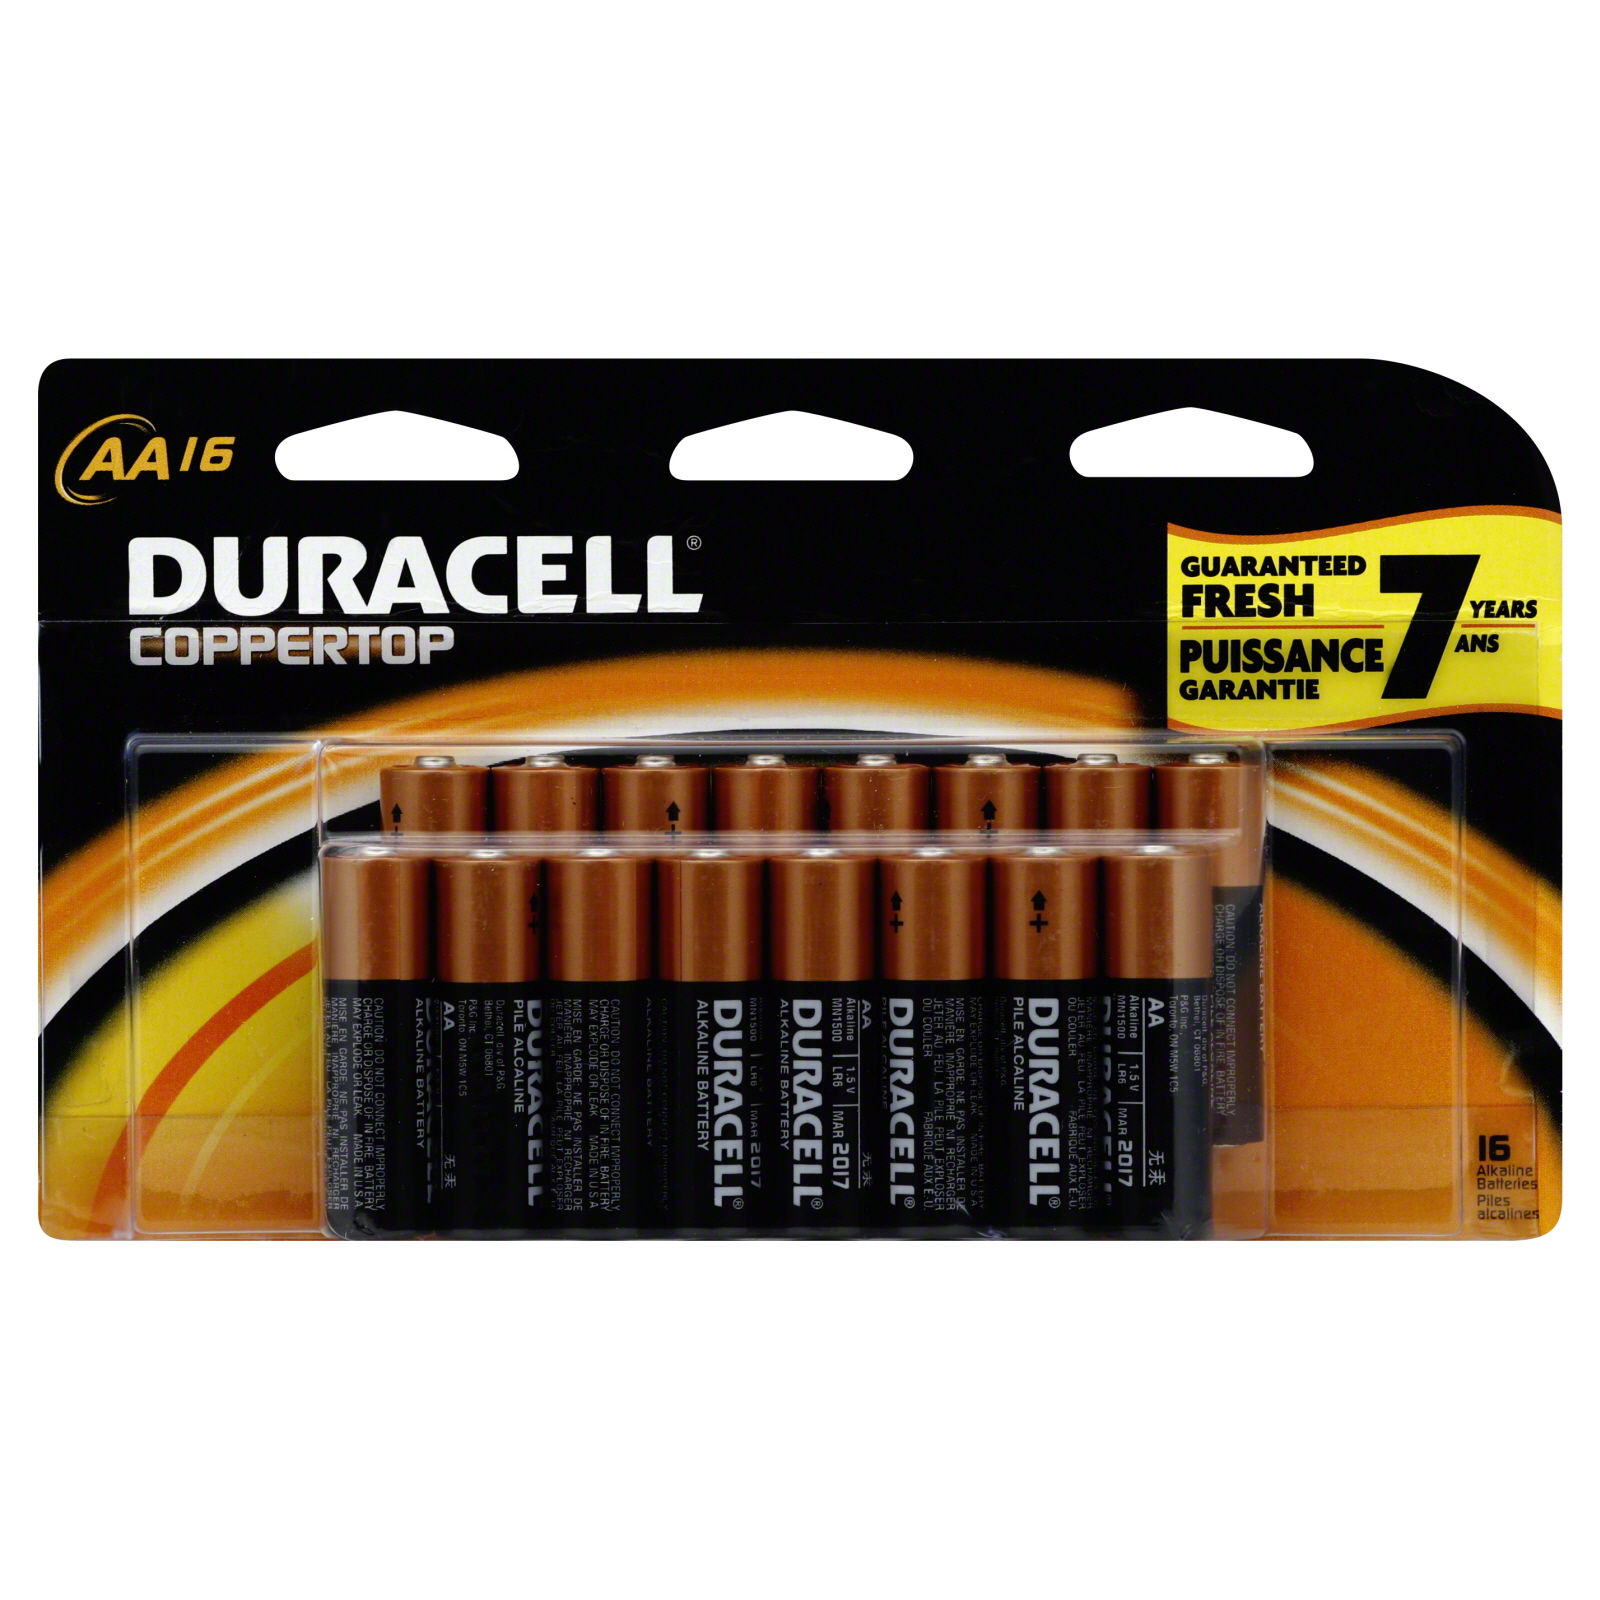 Duracell MN1500B16 Coppertop Batteries, Alkaline, AA, 1.5 V, 16 batteries